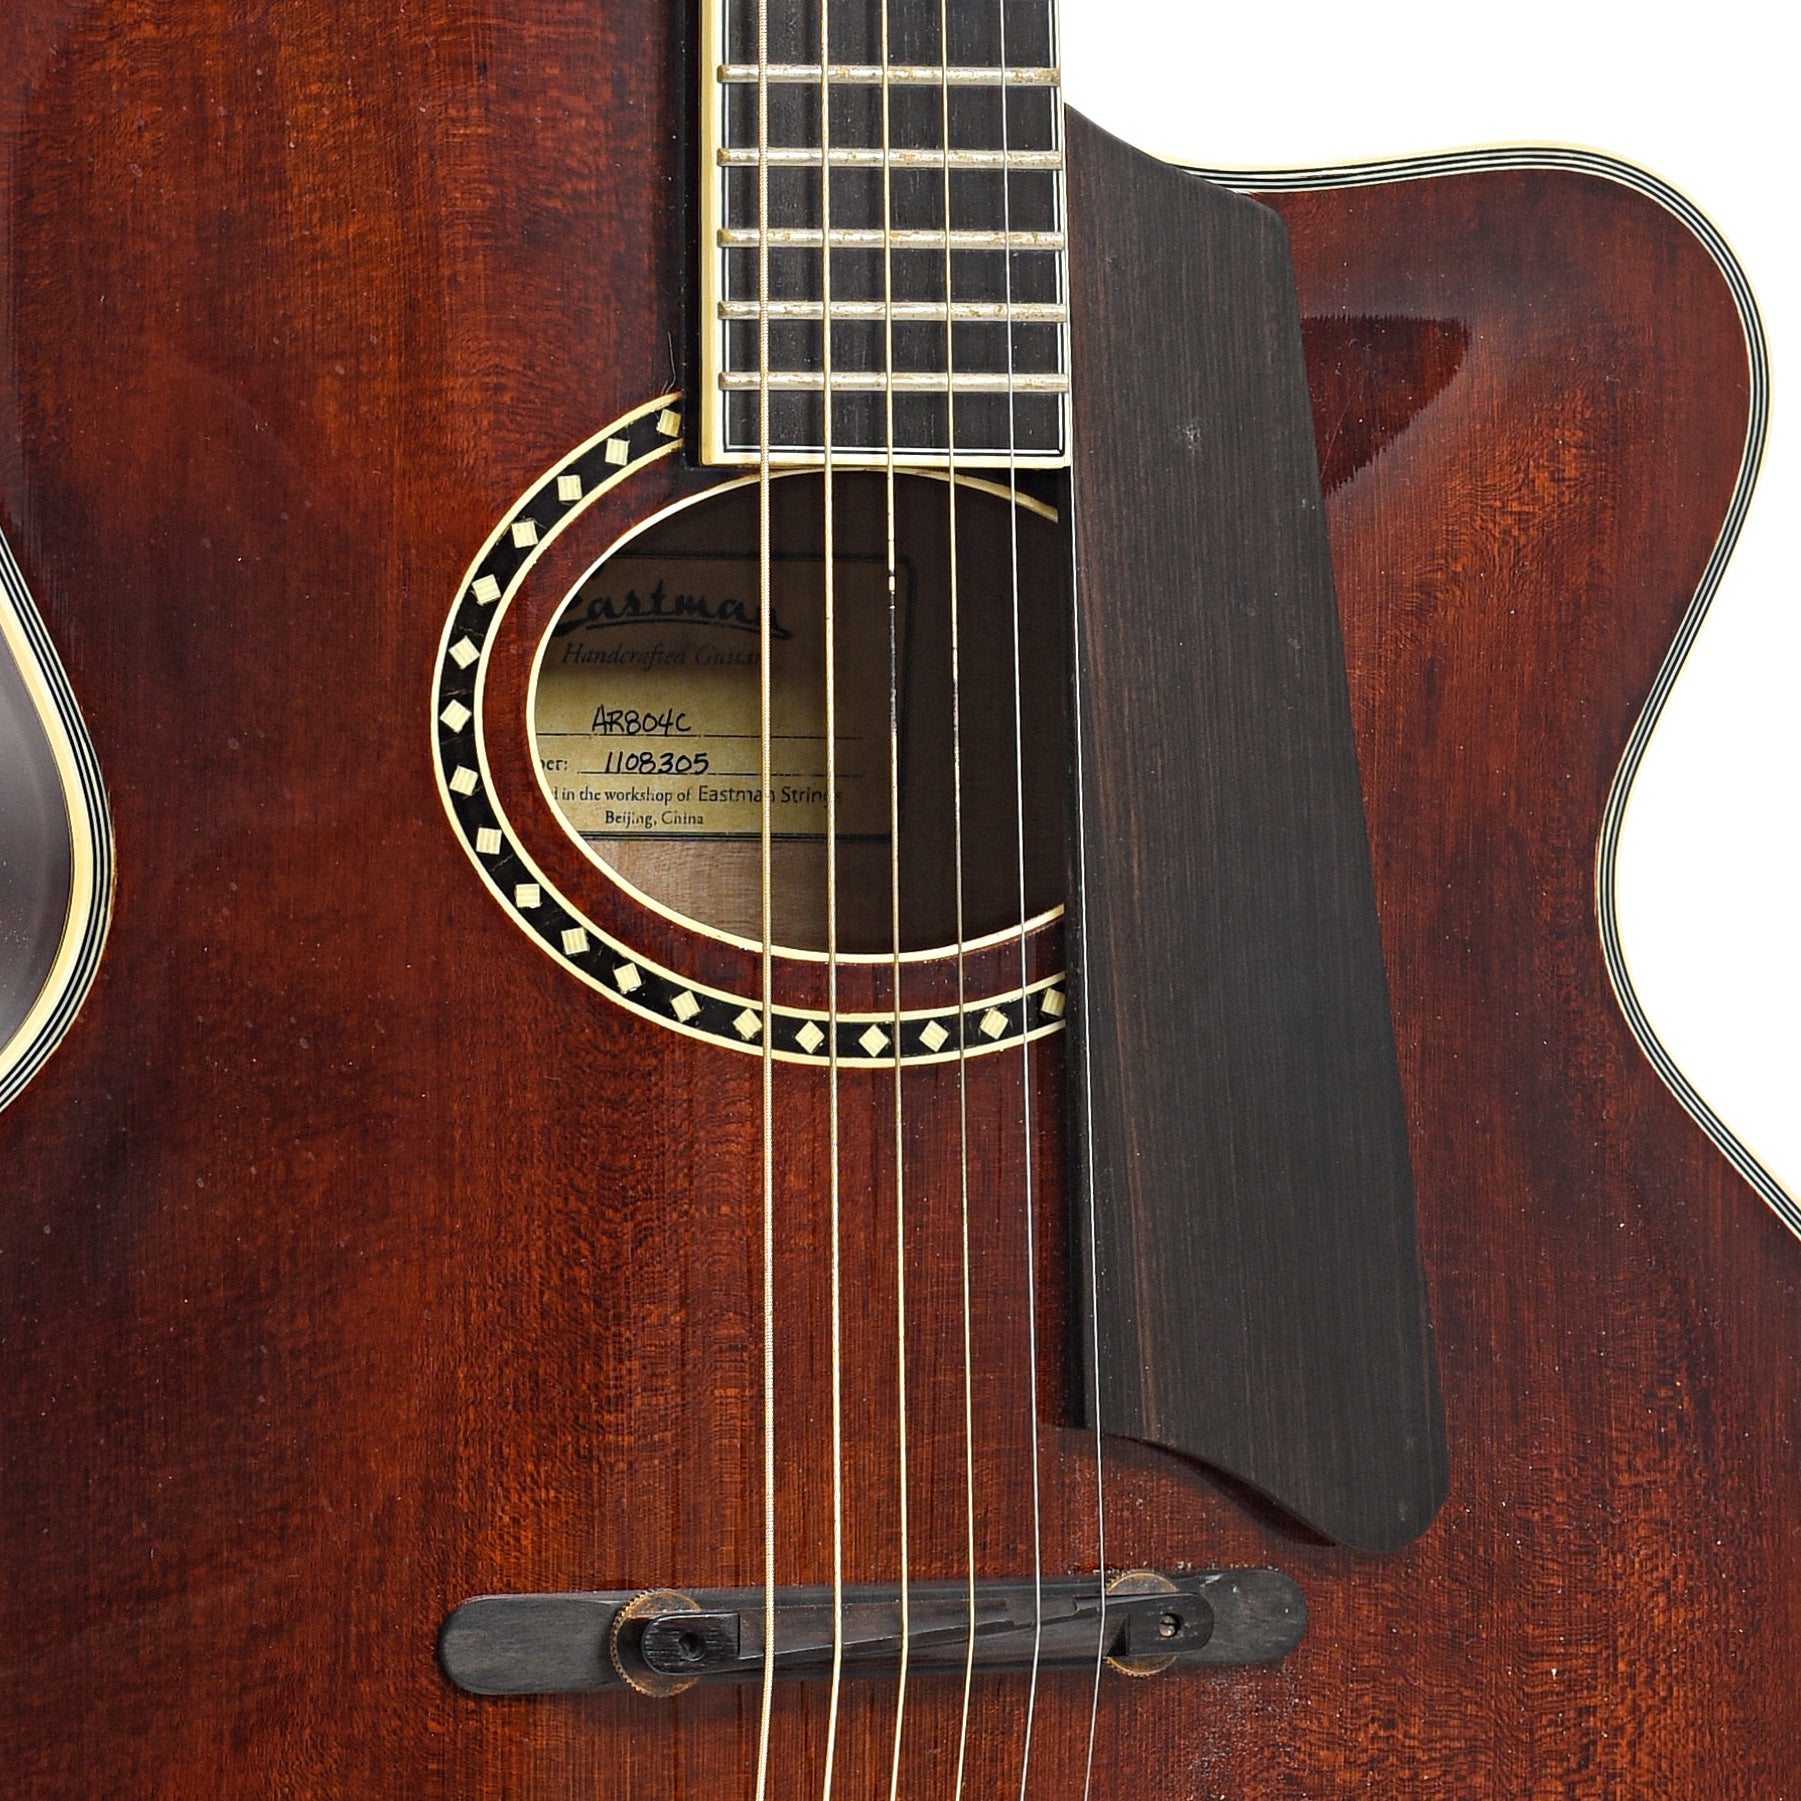 Bridge, sound hole and pickguard of Eastman AR804C Archtop Acoustic Guitar